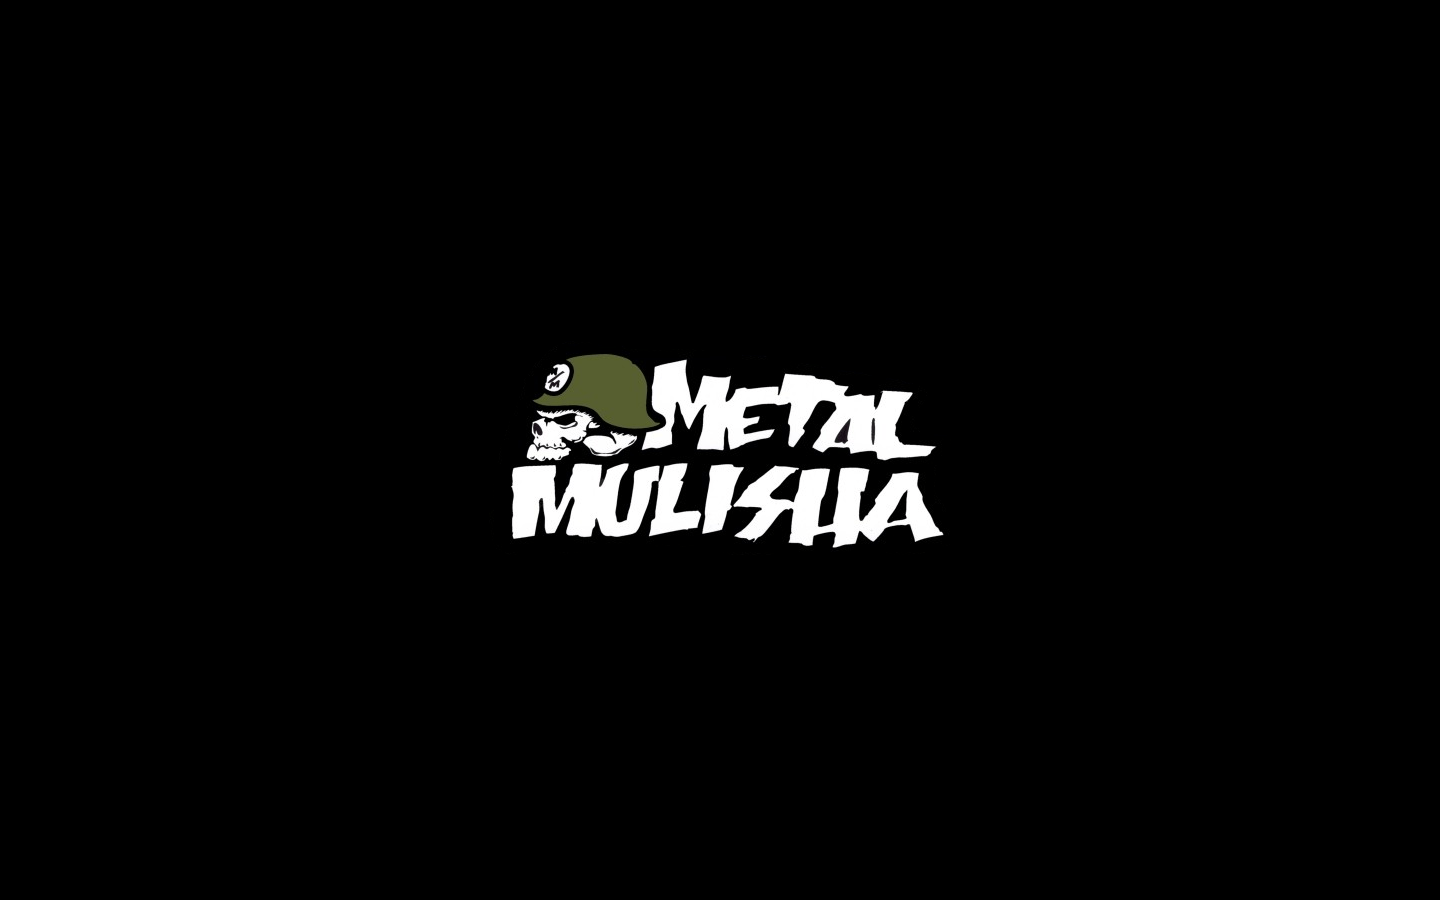 Metal Mulisha Rockstar Logo Wallpaper Image Amp Pictures